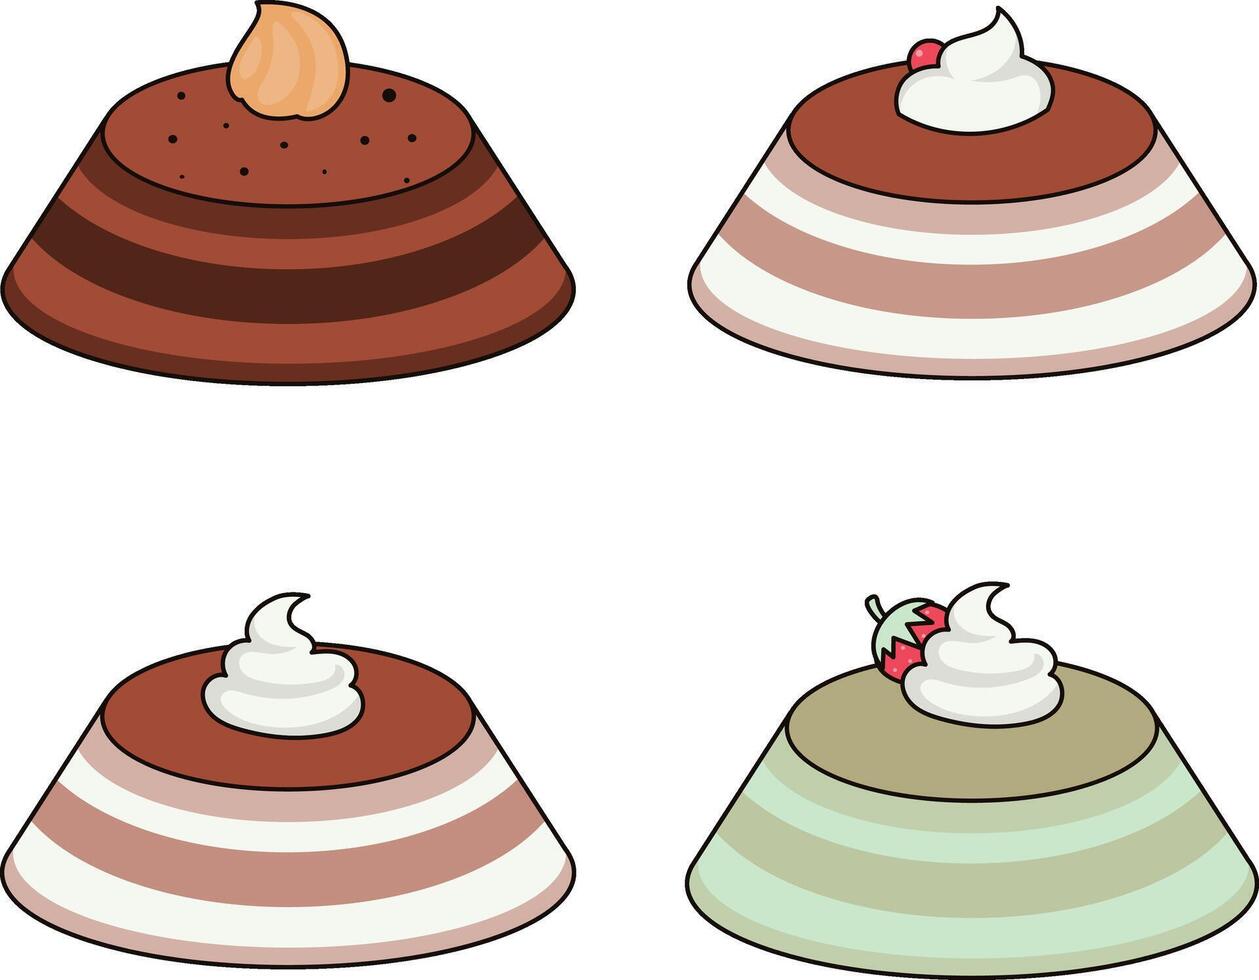 Sweet Pudding Dessert in Cute Cartoon Design. Vector Illustration Set